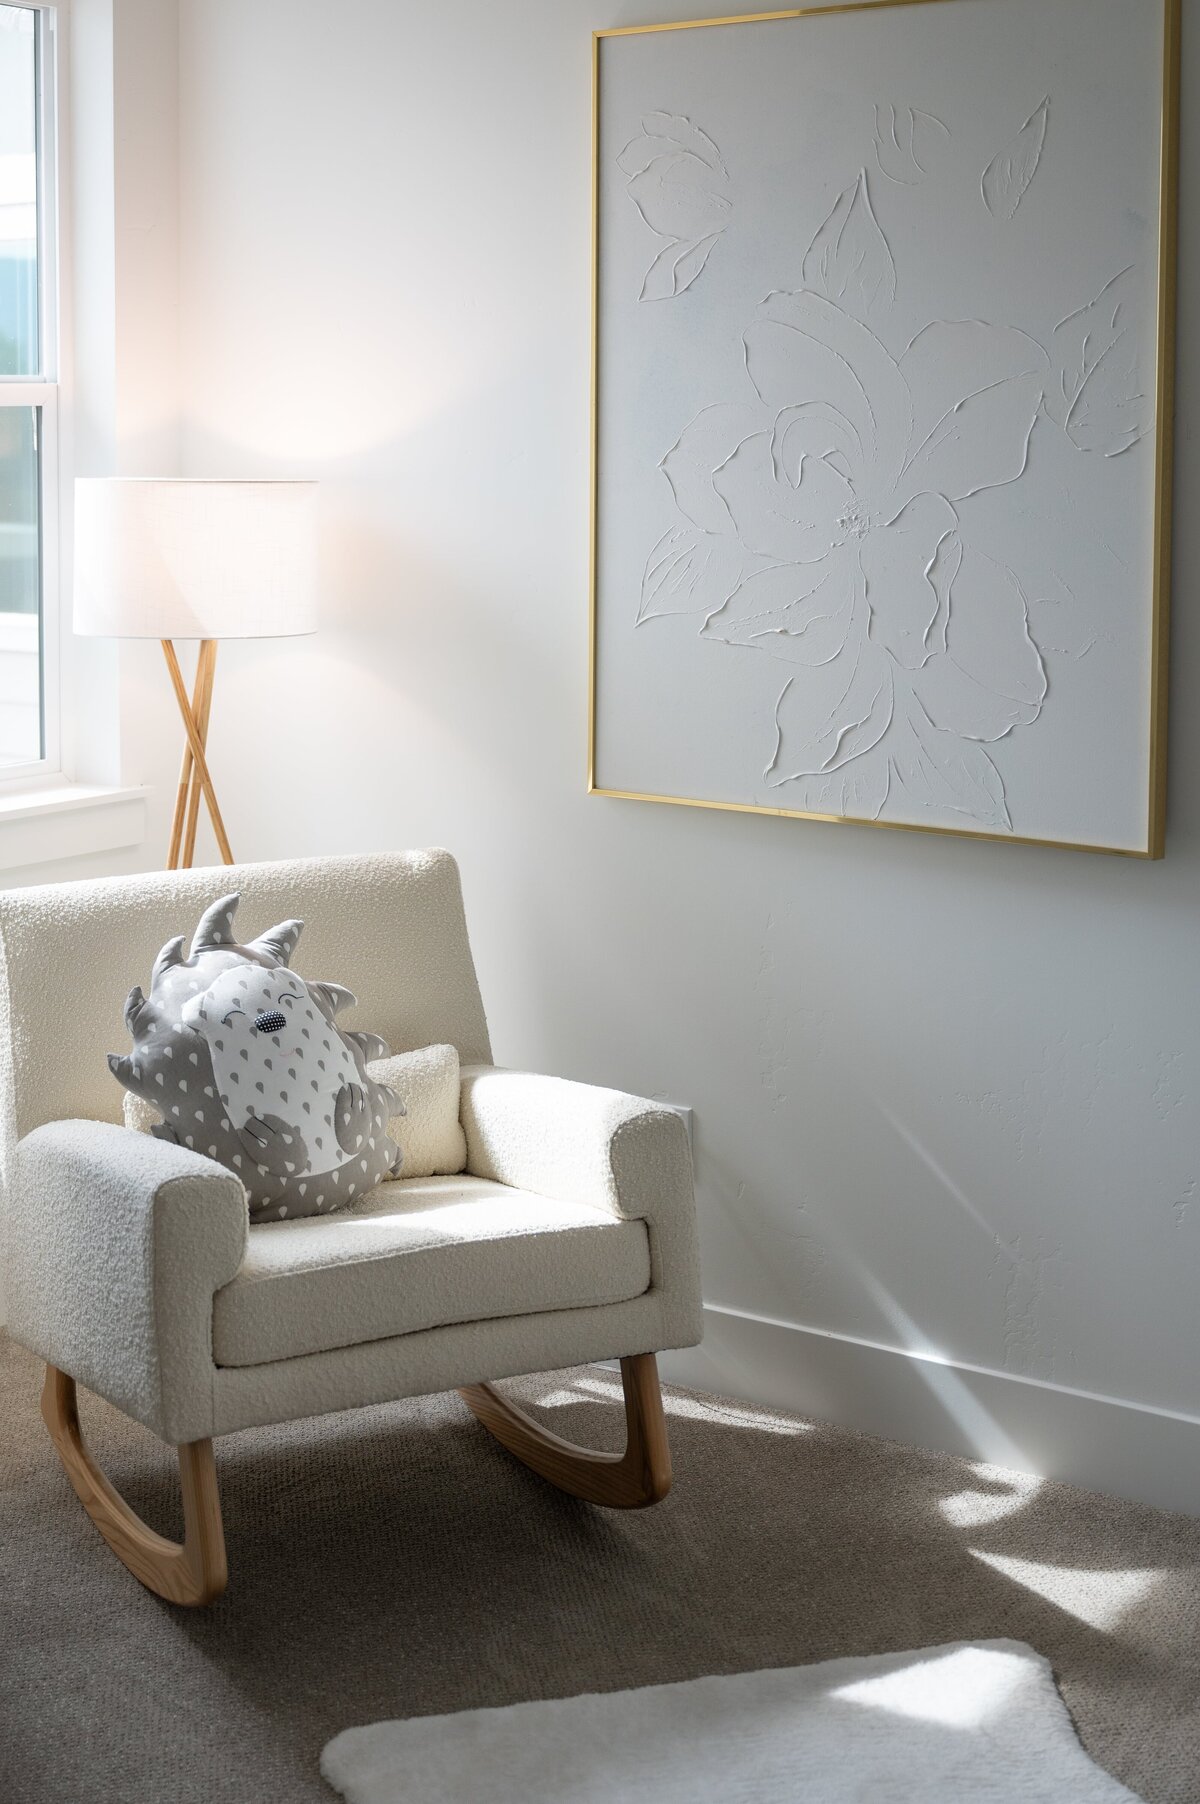 Nursery interior design with white rocking chair, crib, and artwork